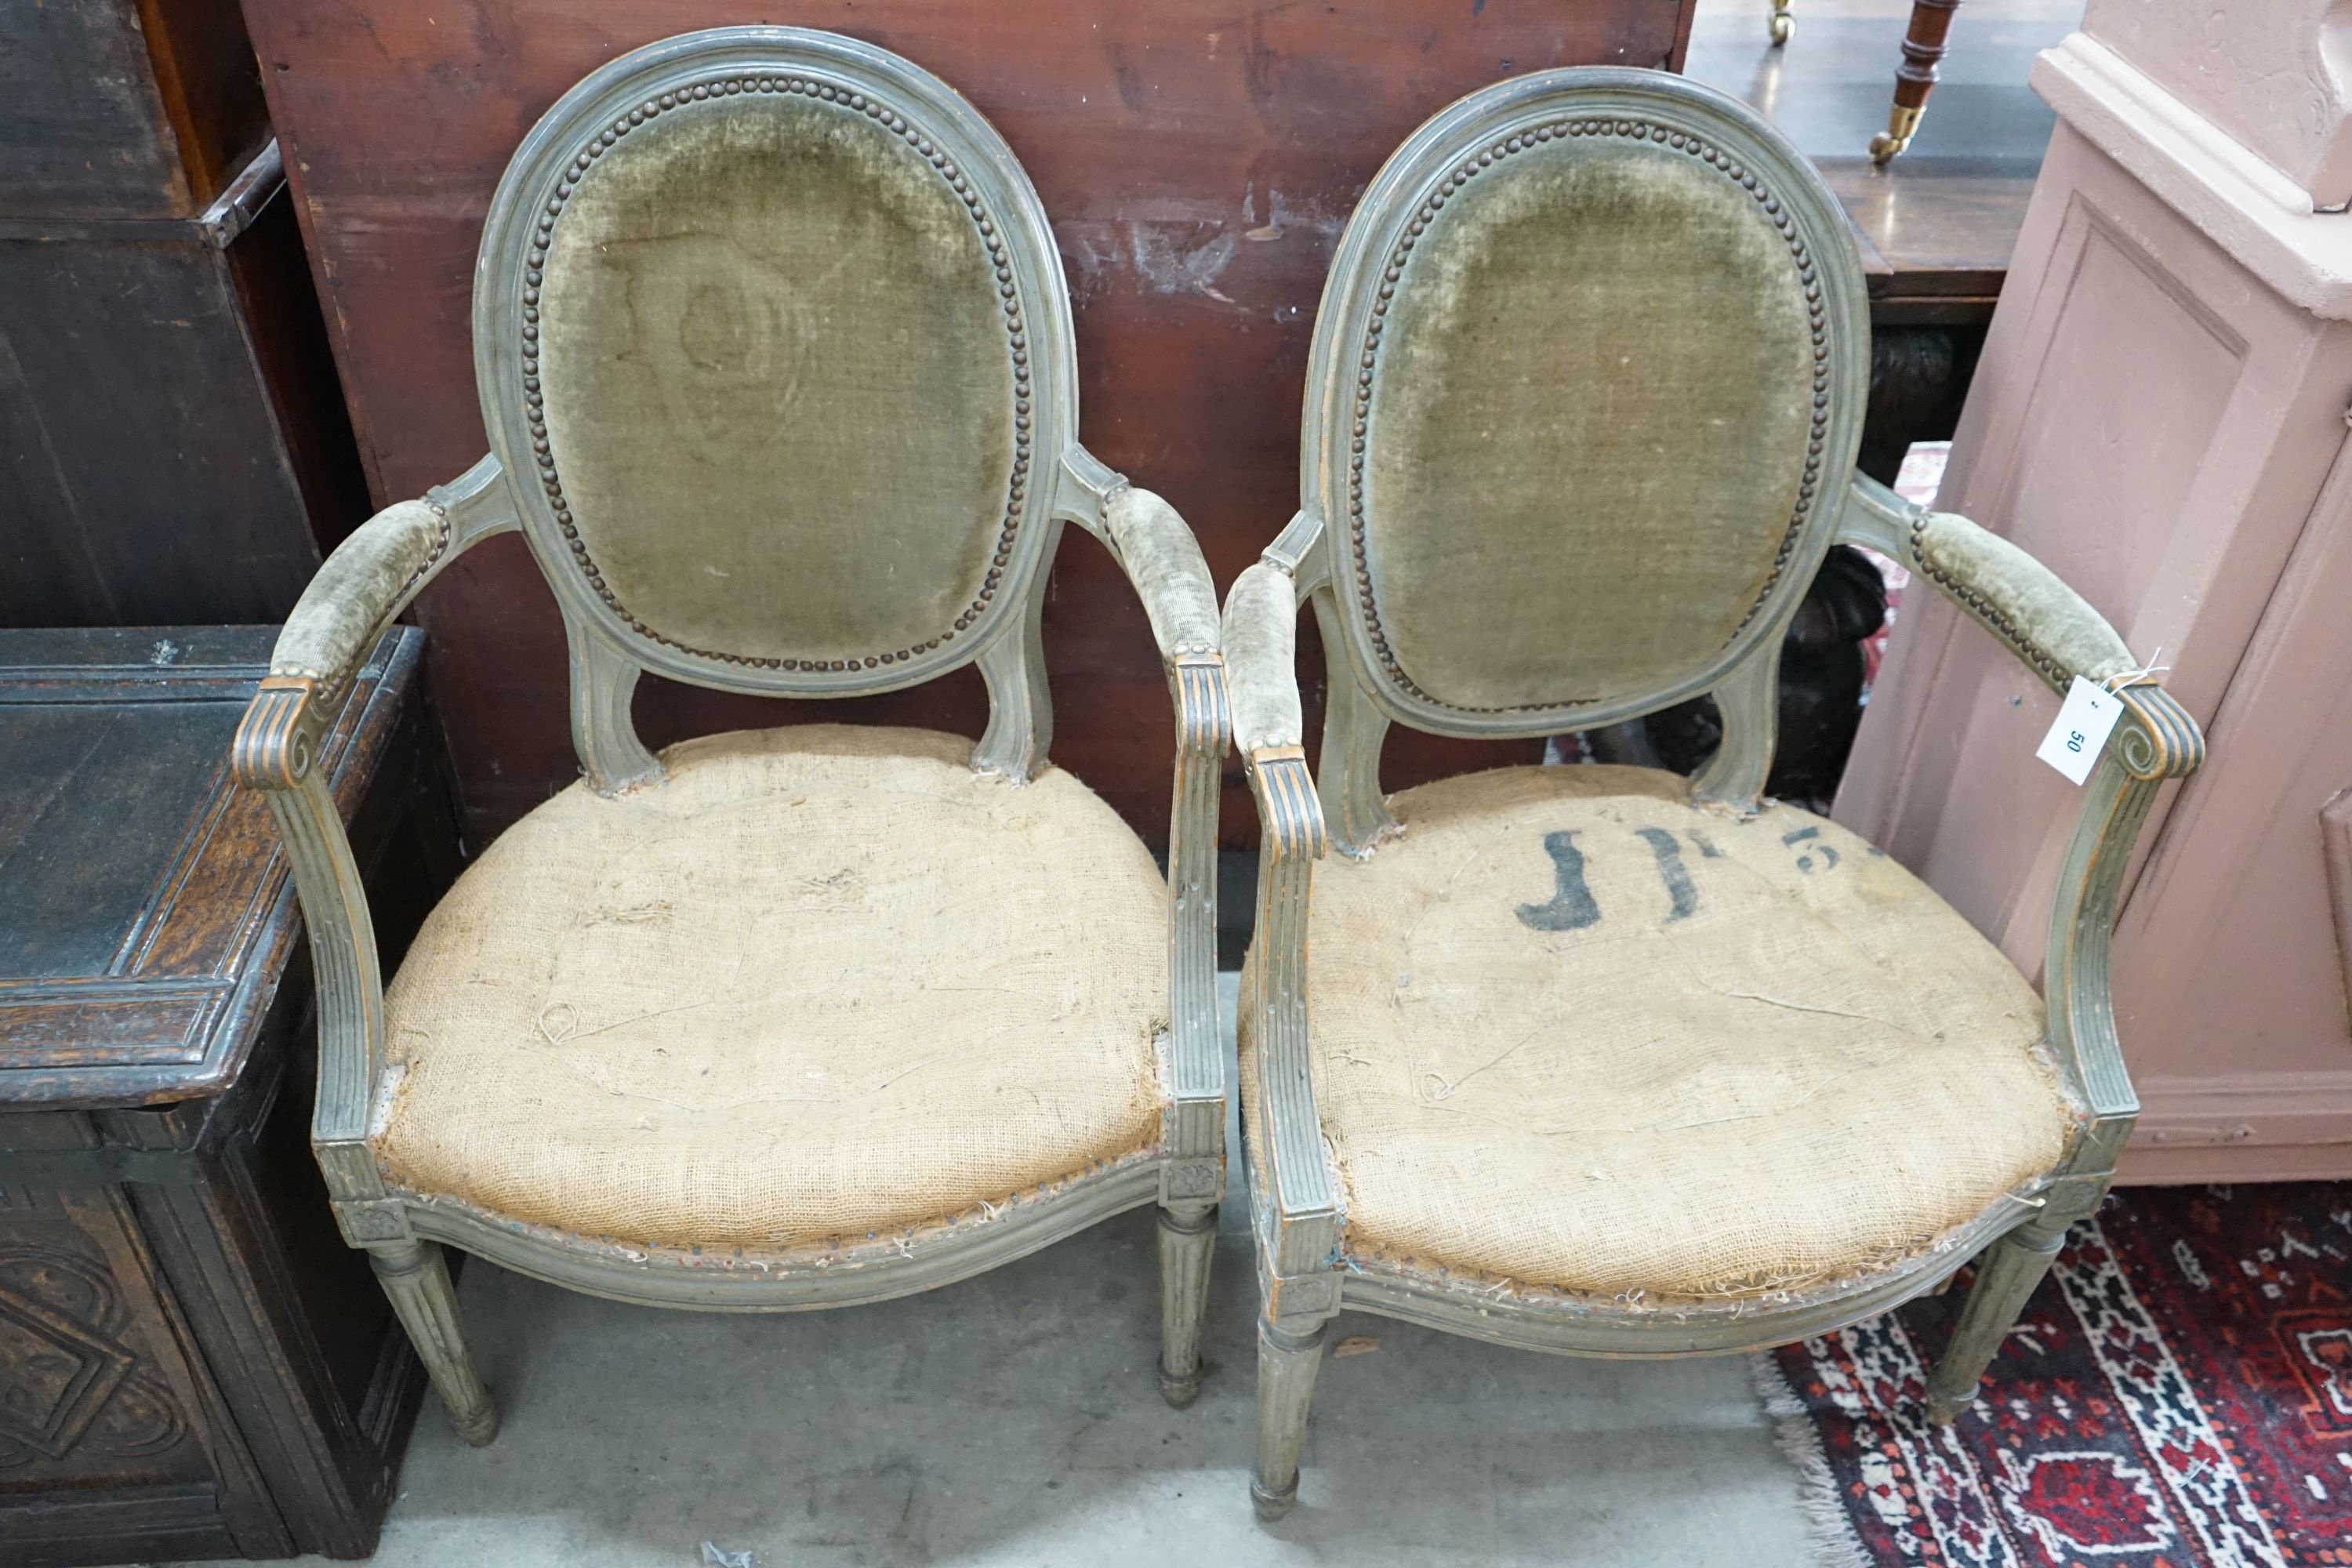 A pair of Louis XVI style painted fauteuils, width 59cm, depth 50cm, height 92cm